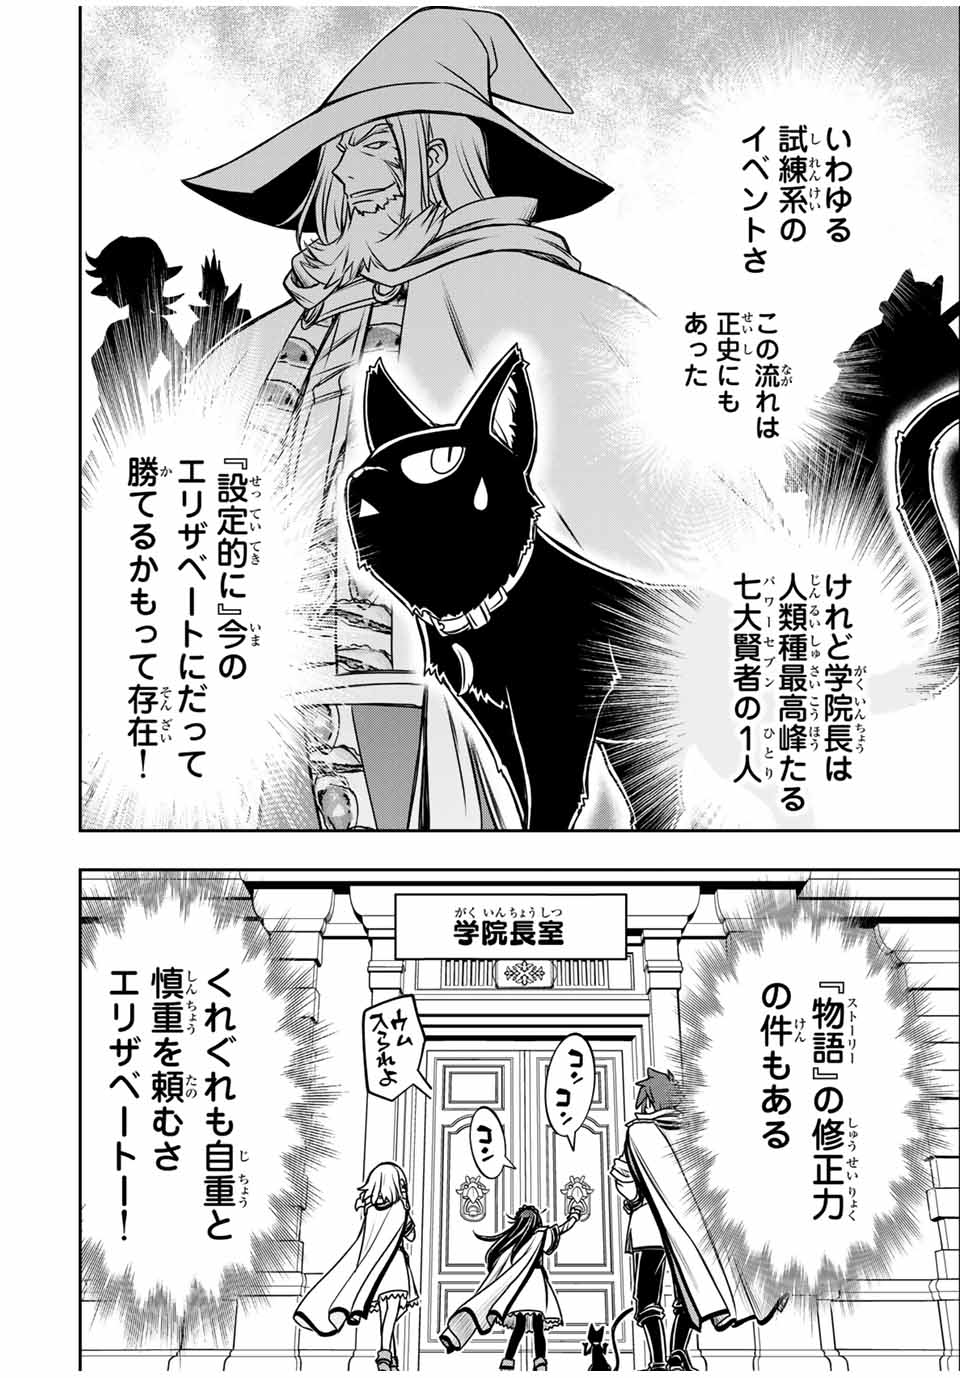 Nengan no Akuyaku Reijou (Last Boss) no Karada wo Teniiretazo!  - Chapter 24 - Page 16